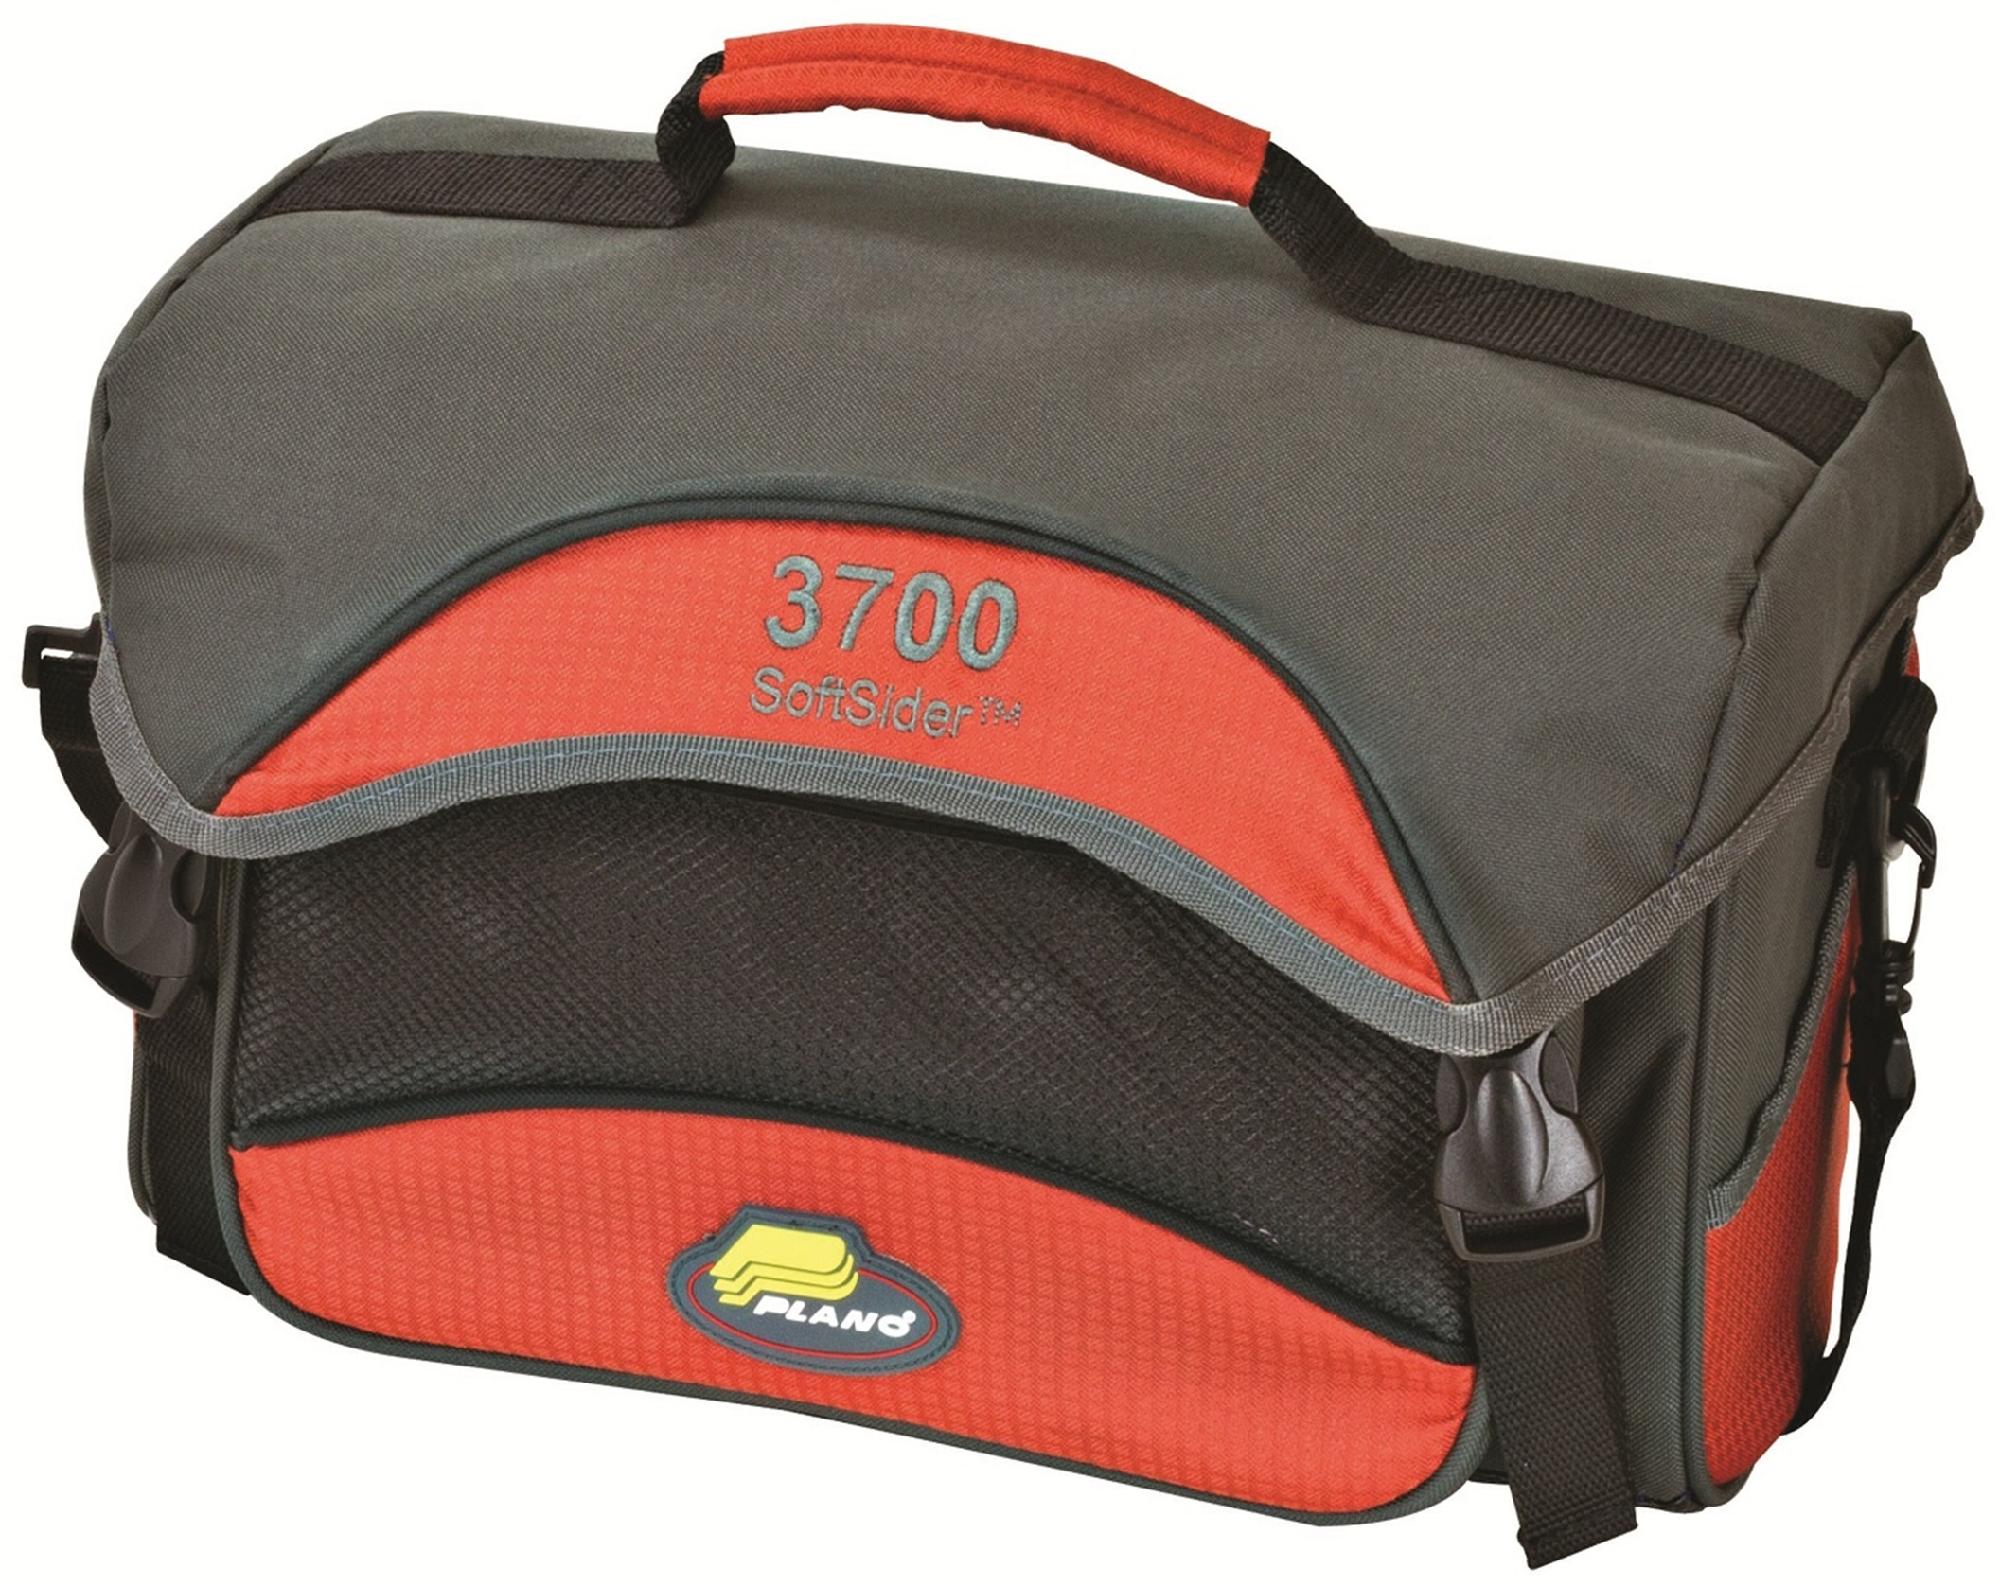 Plano SoftSider 3700 Size Tackle Bag